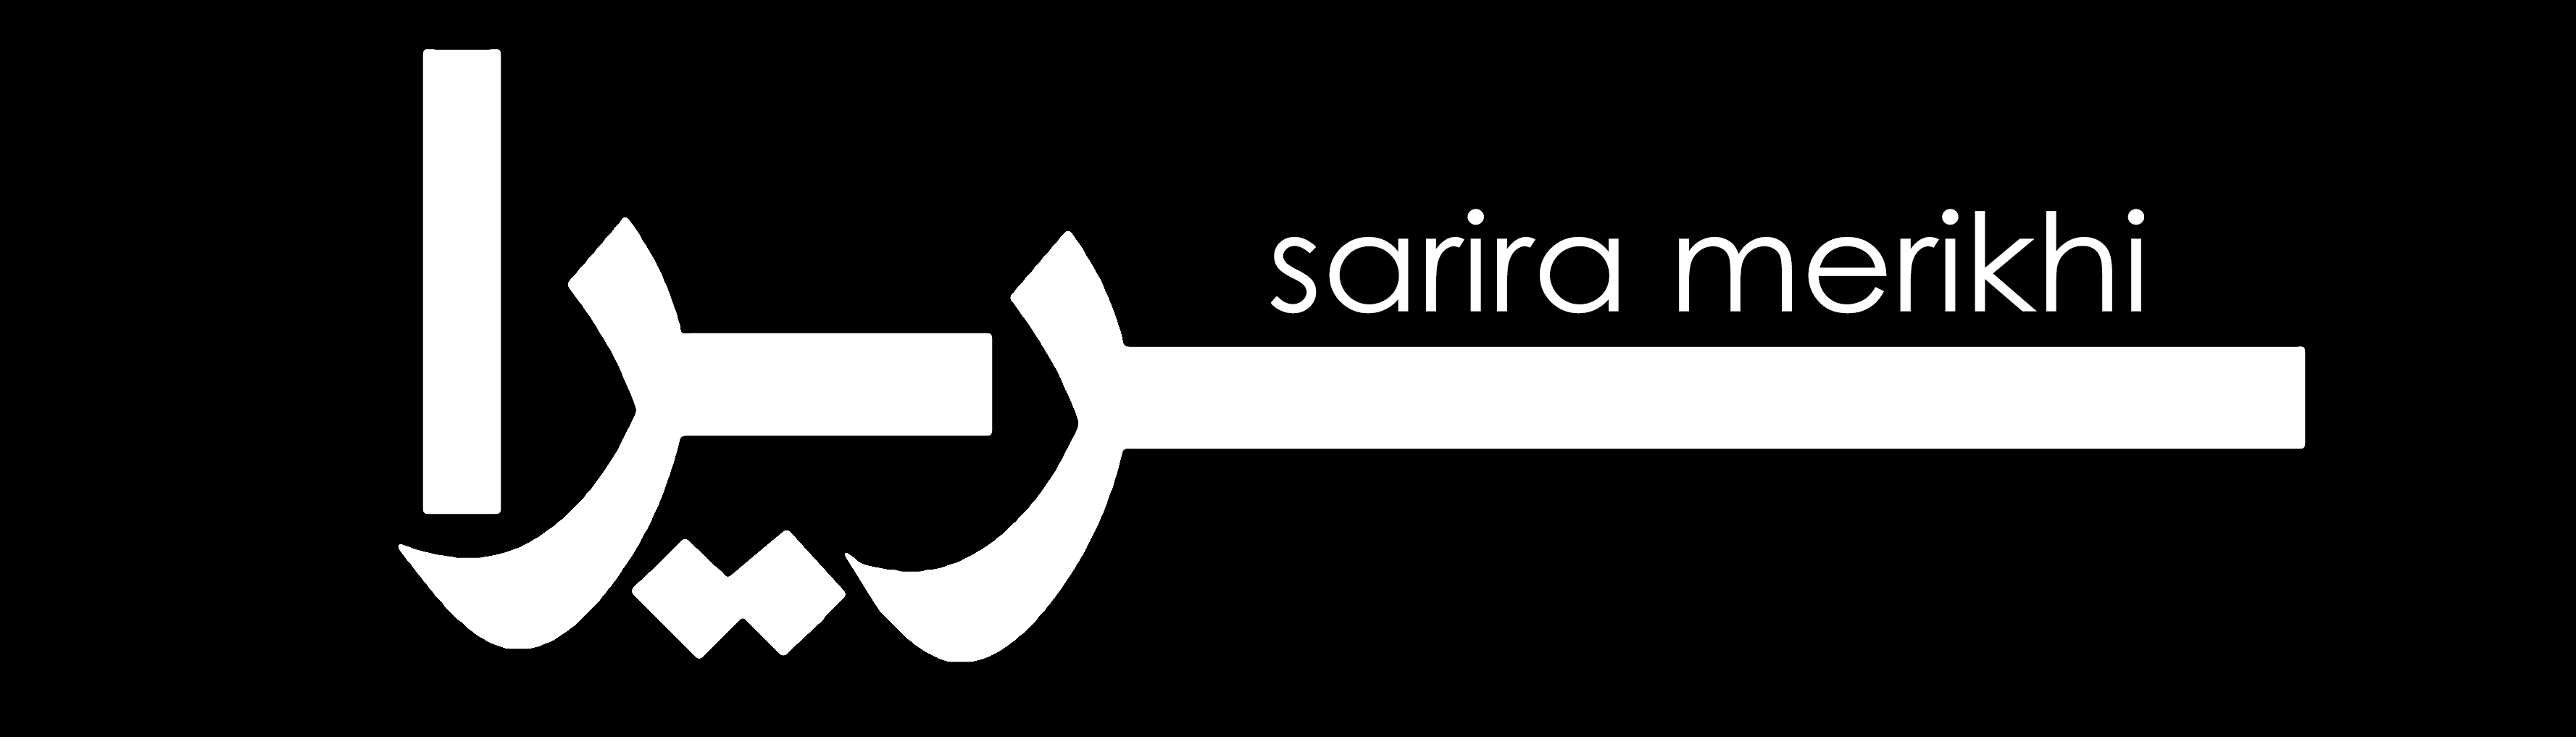 SariraMerikhi 横幅